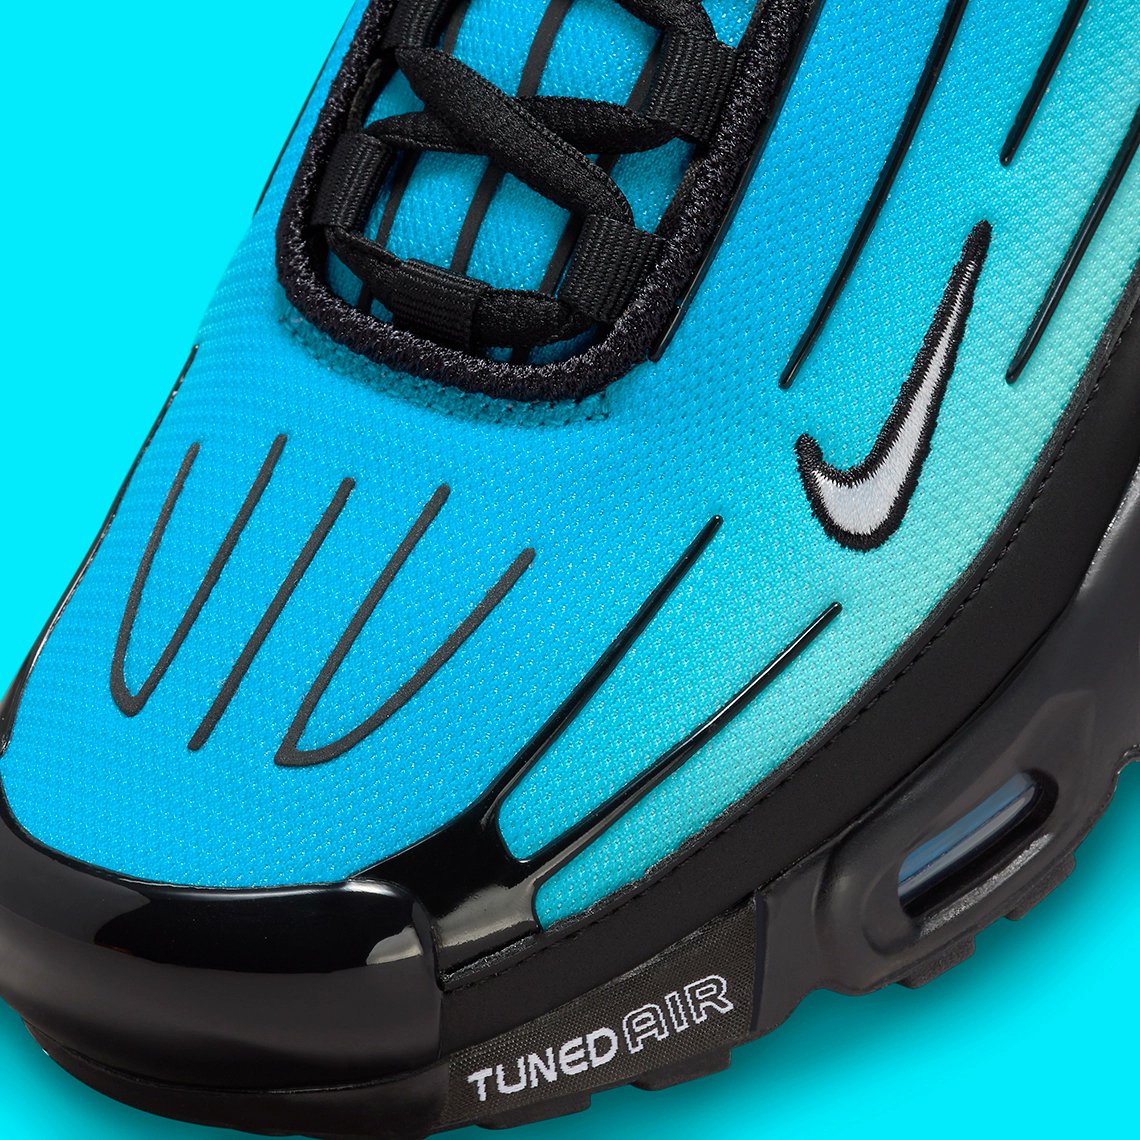 Sneaker News on "Nike Air Max 3 "Aqua" https://t.co/SqRwKEh3si" / Twitter